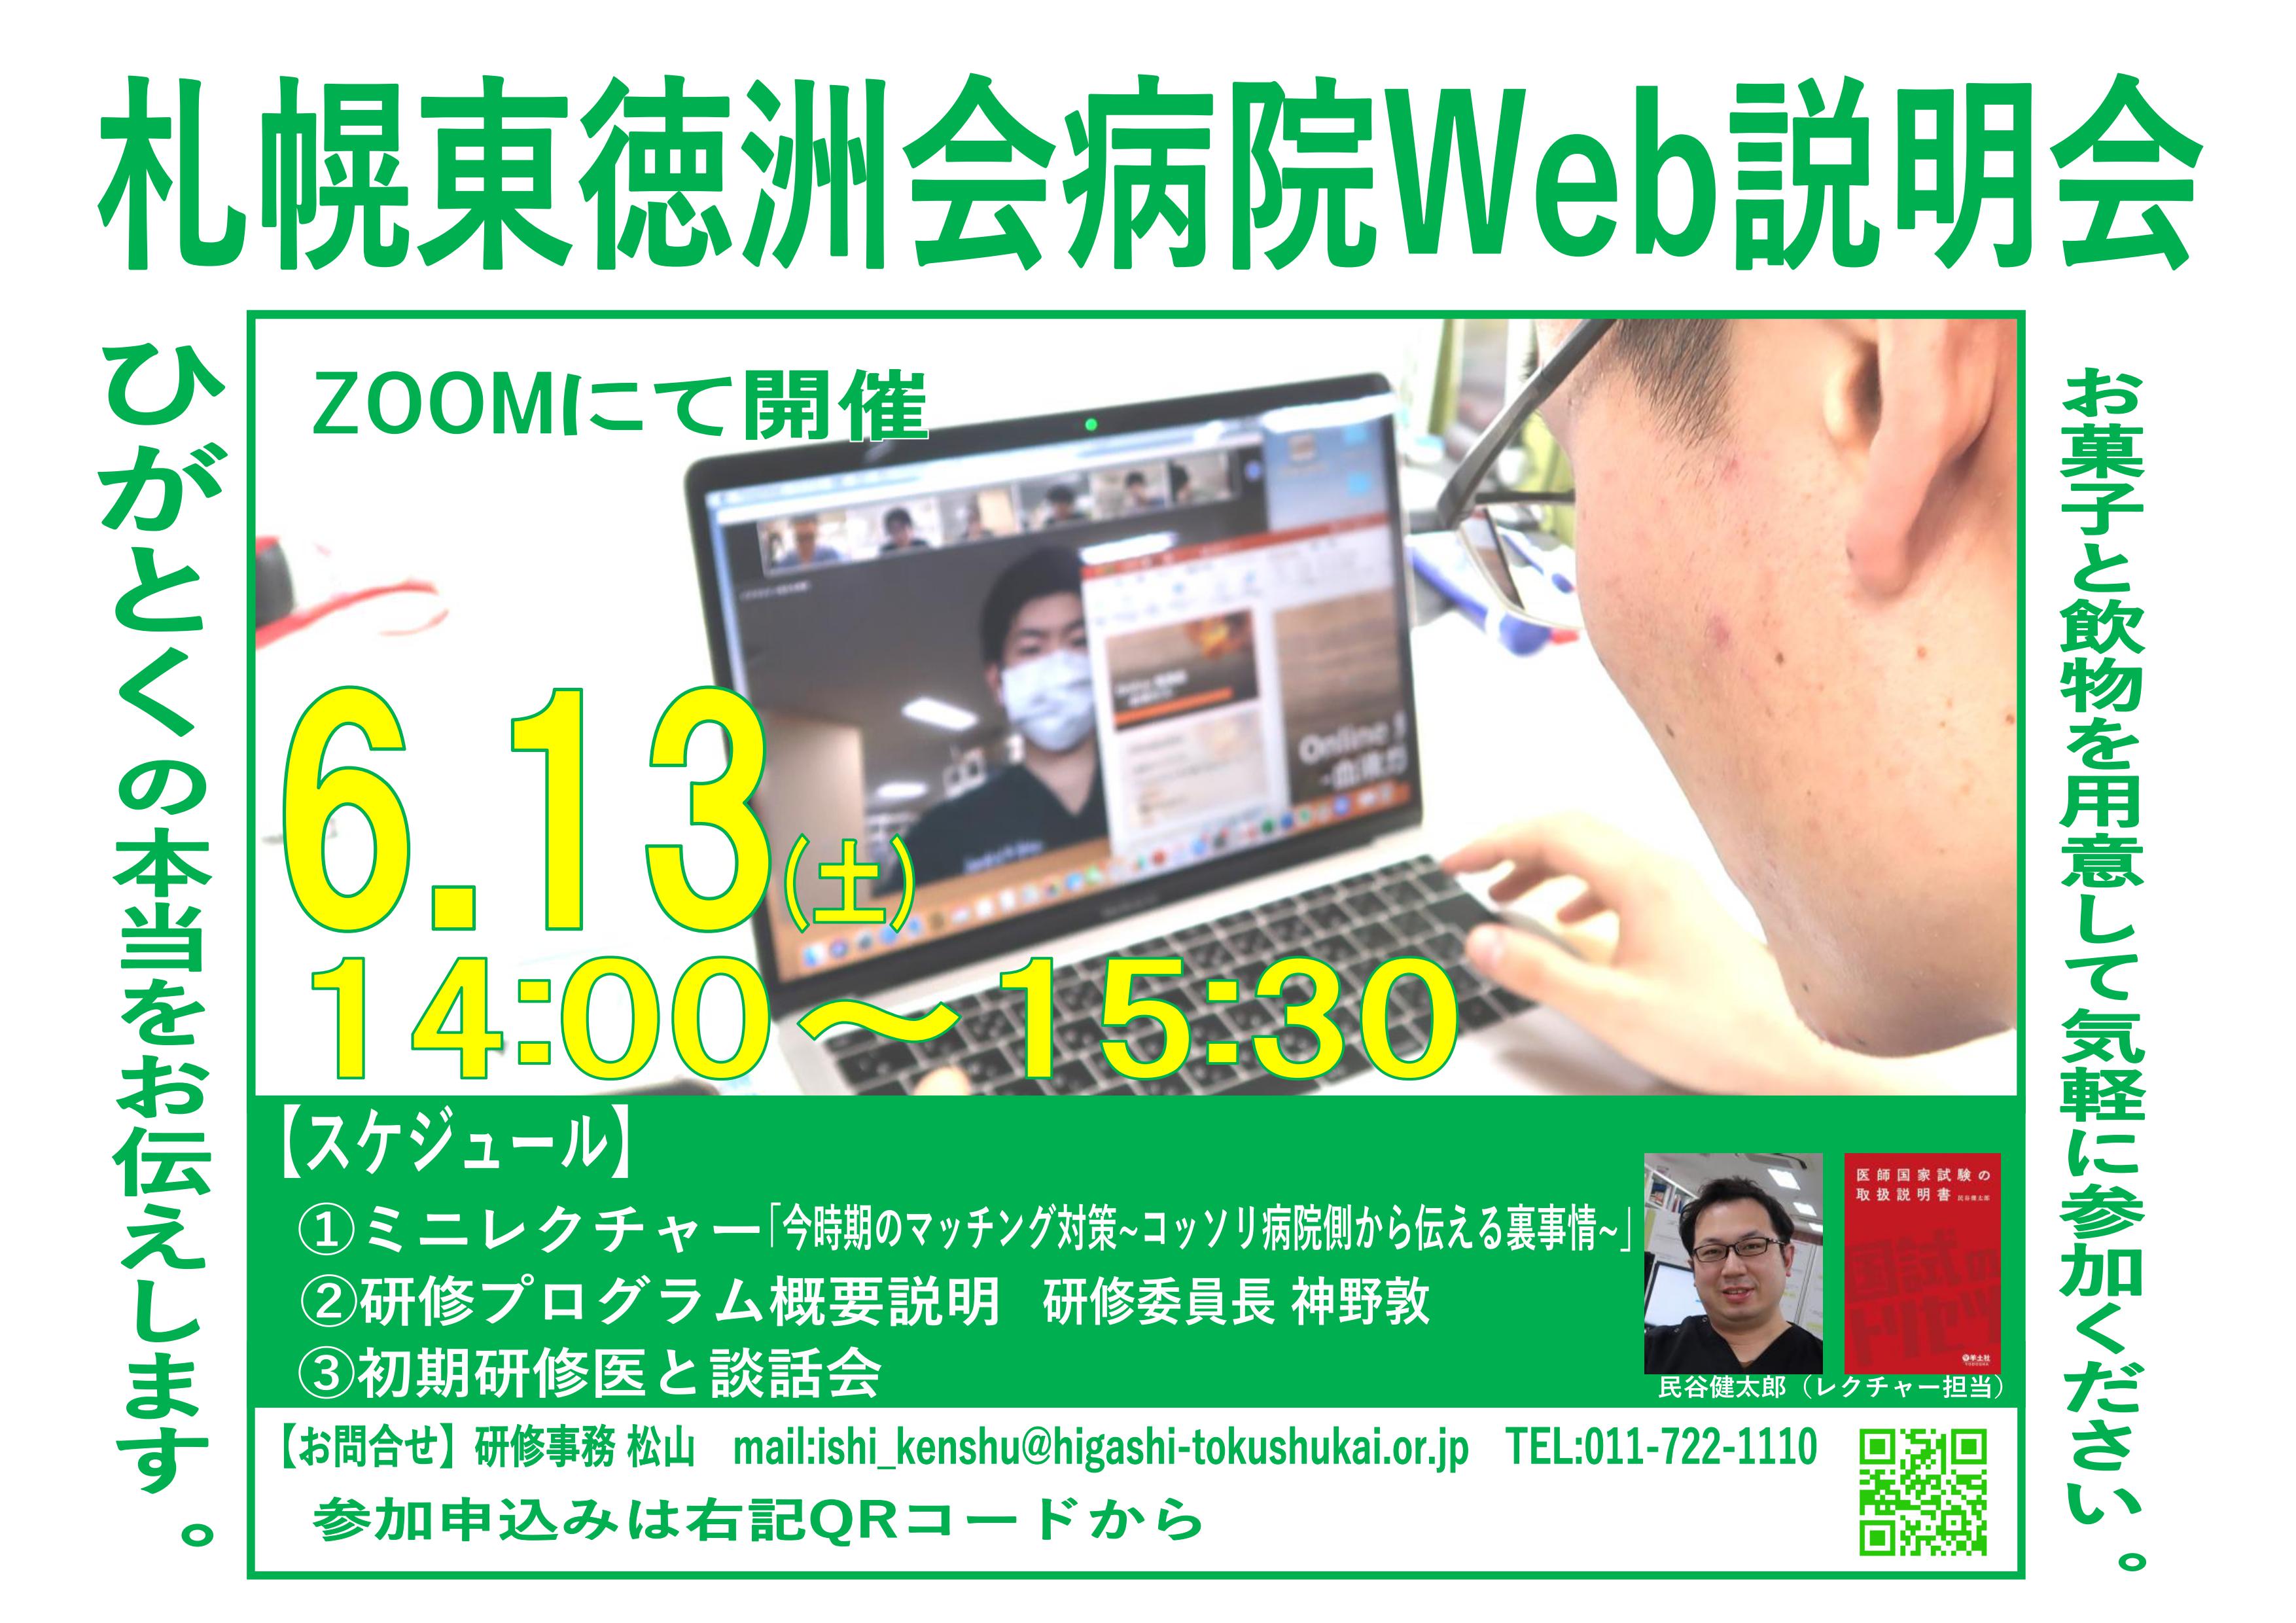 http://blog.higashi-tokushukai.or.jp/ydblog/6.13Web%E8%AA%AC%E6%98%8E%E4%BC%9A.jpg